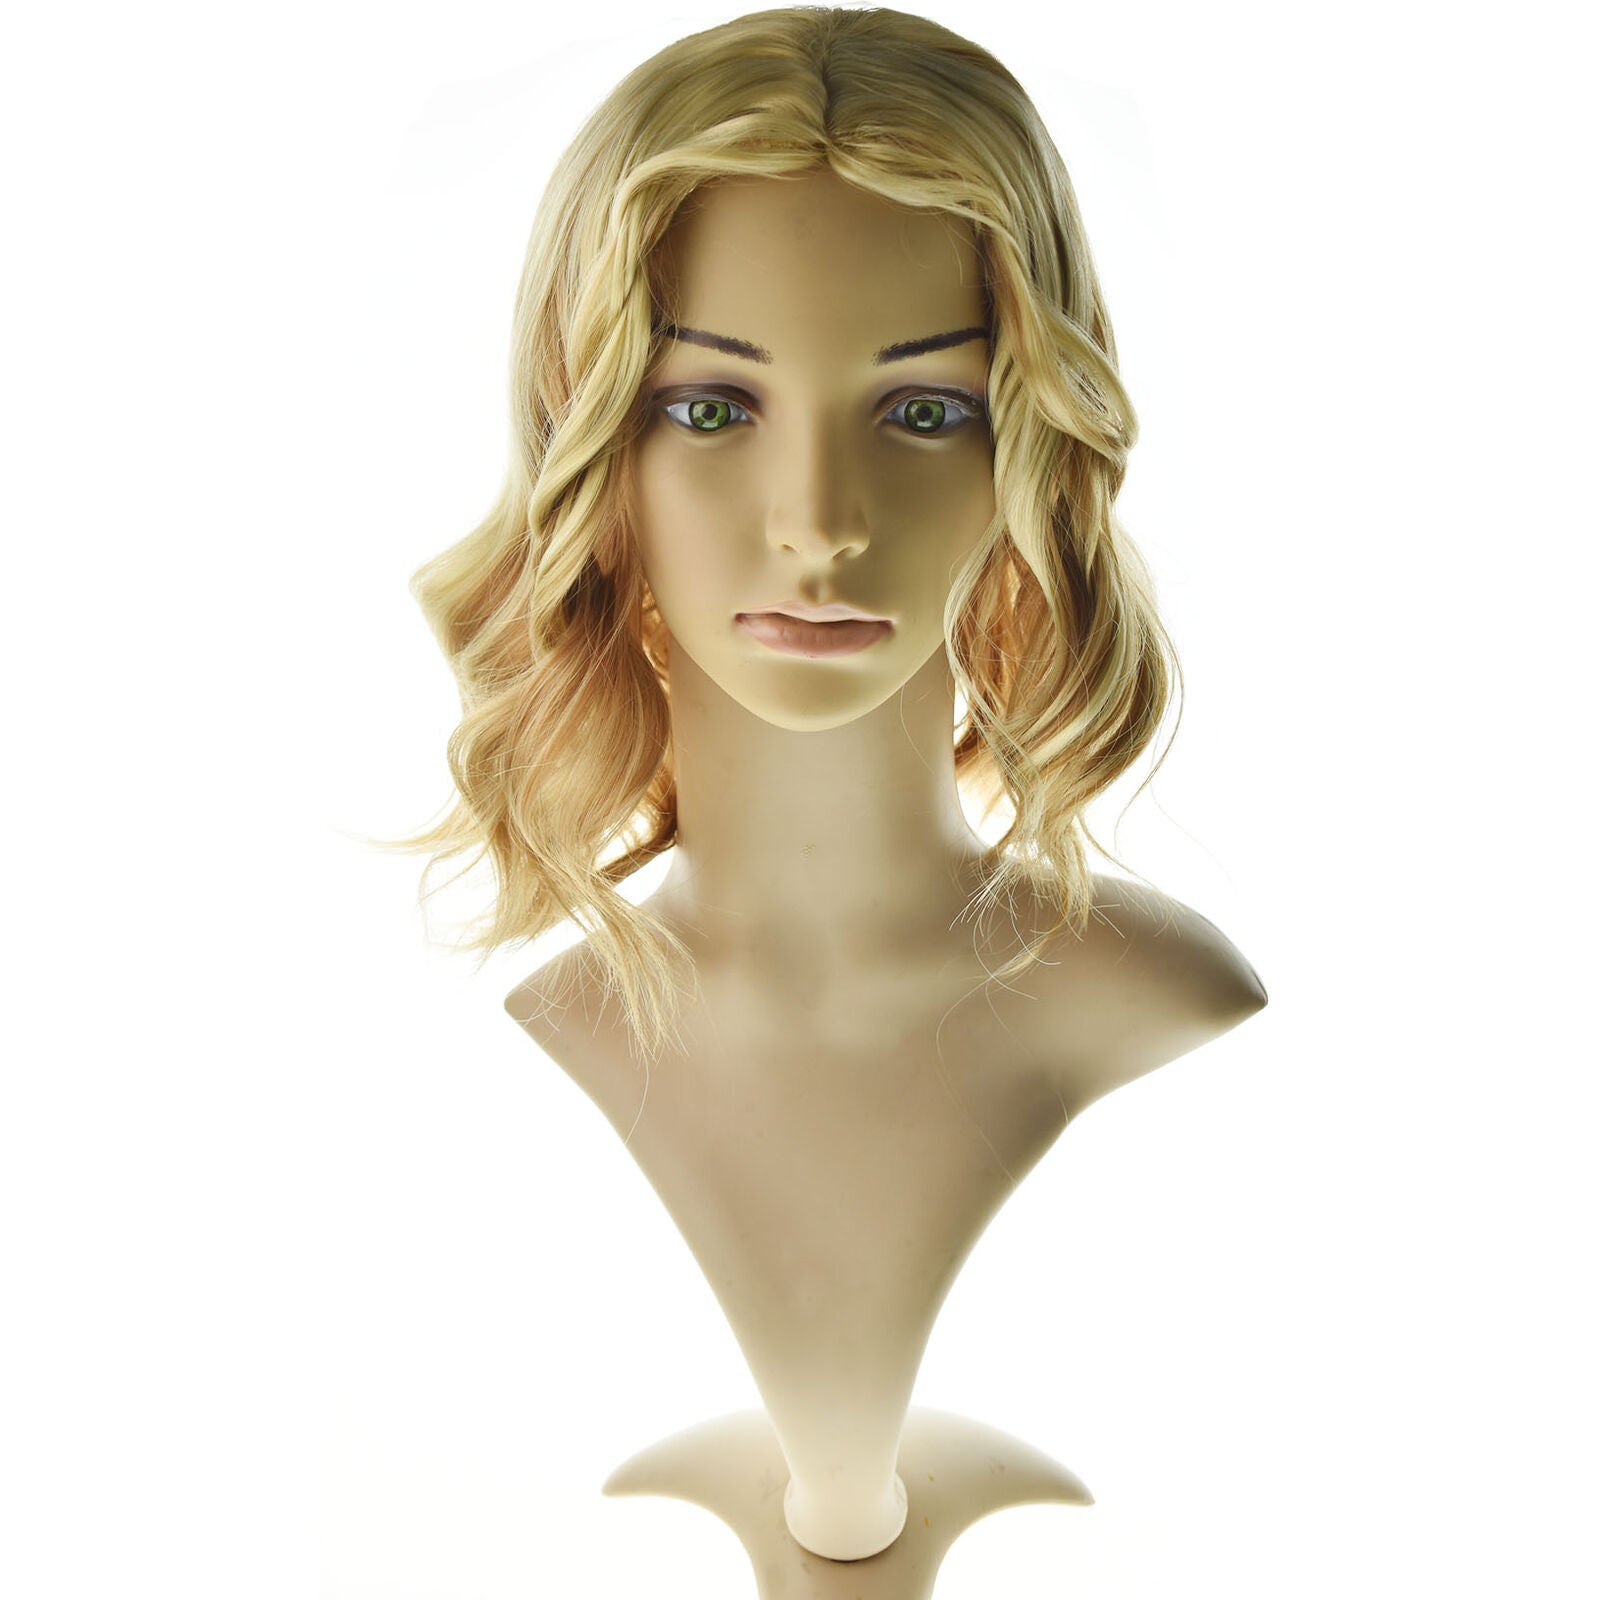 Women Tousled Modern Bob Short Loose Wave Blond Balayage Synthetic Hair